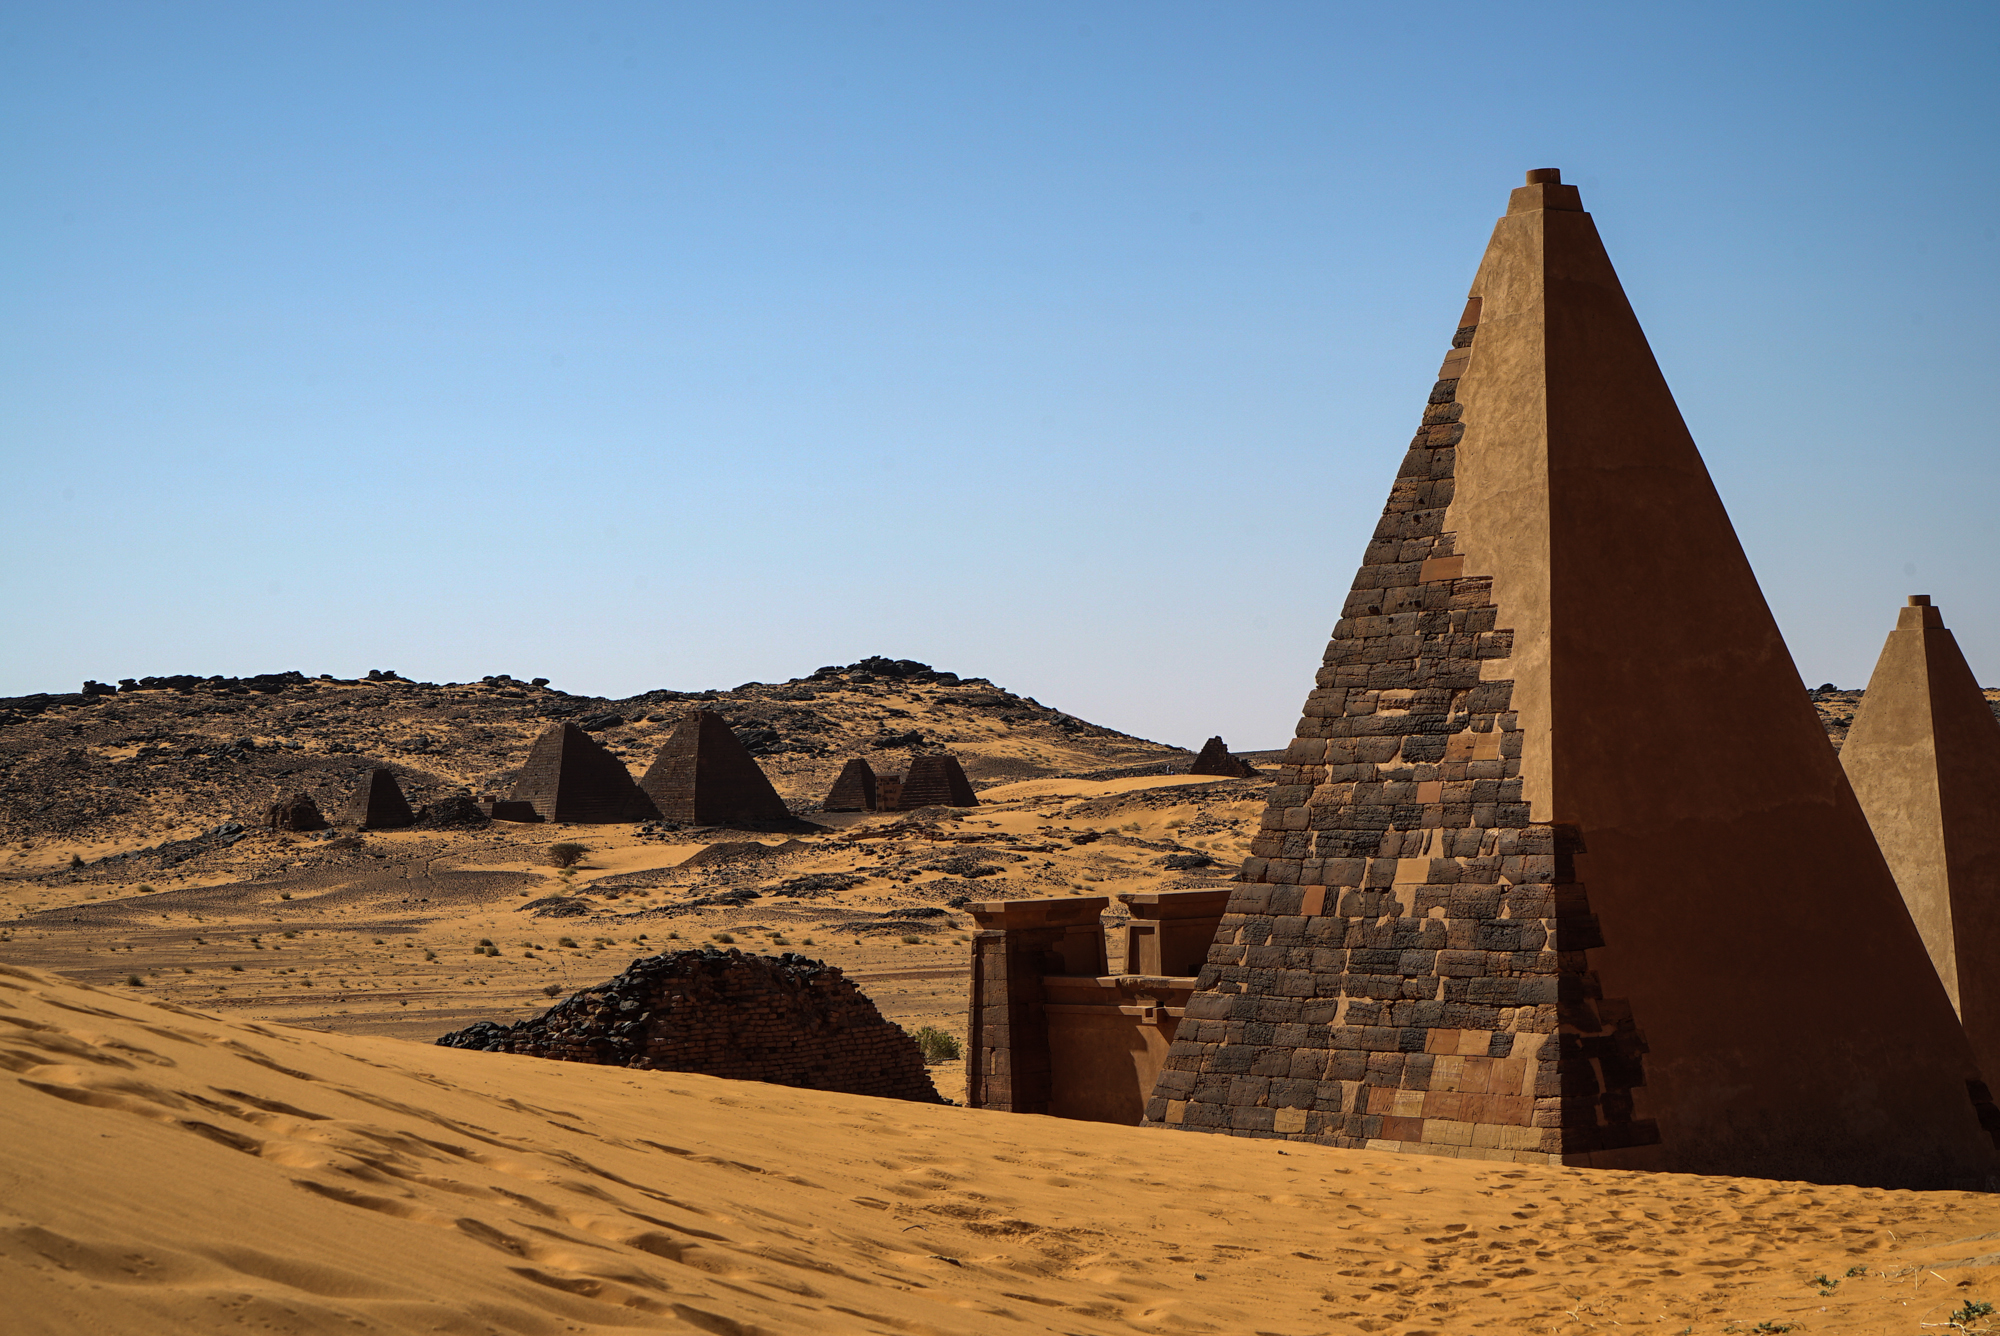 Pictures Of Sudans Forgotten Nubian Pyramids Al Jazeera